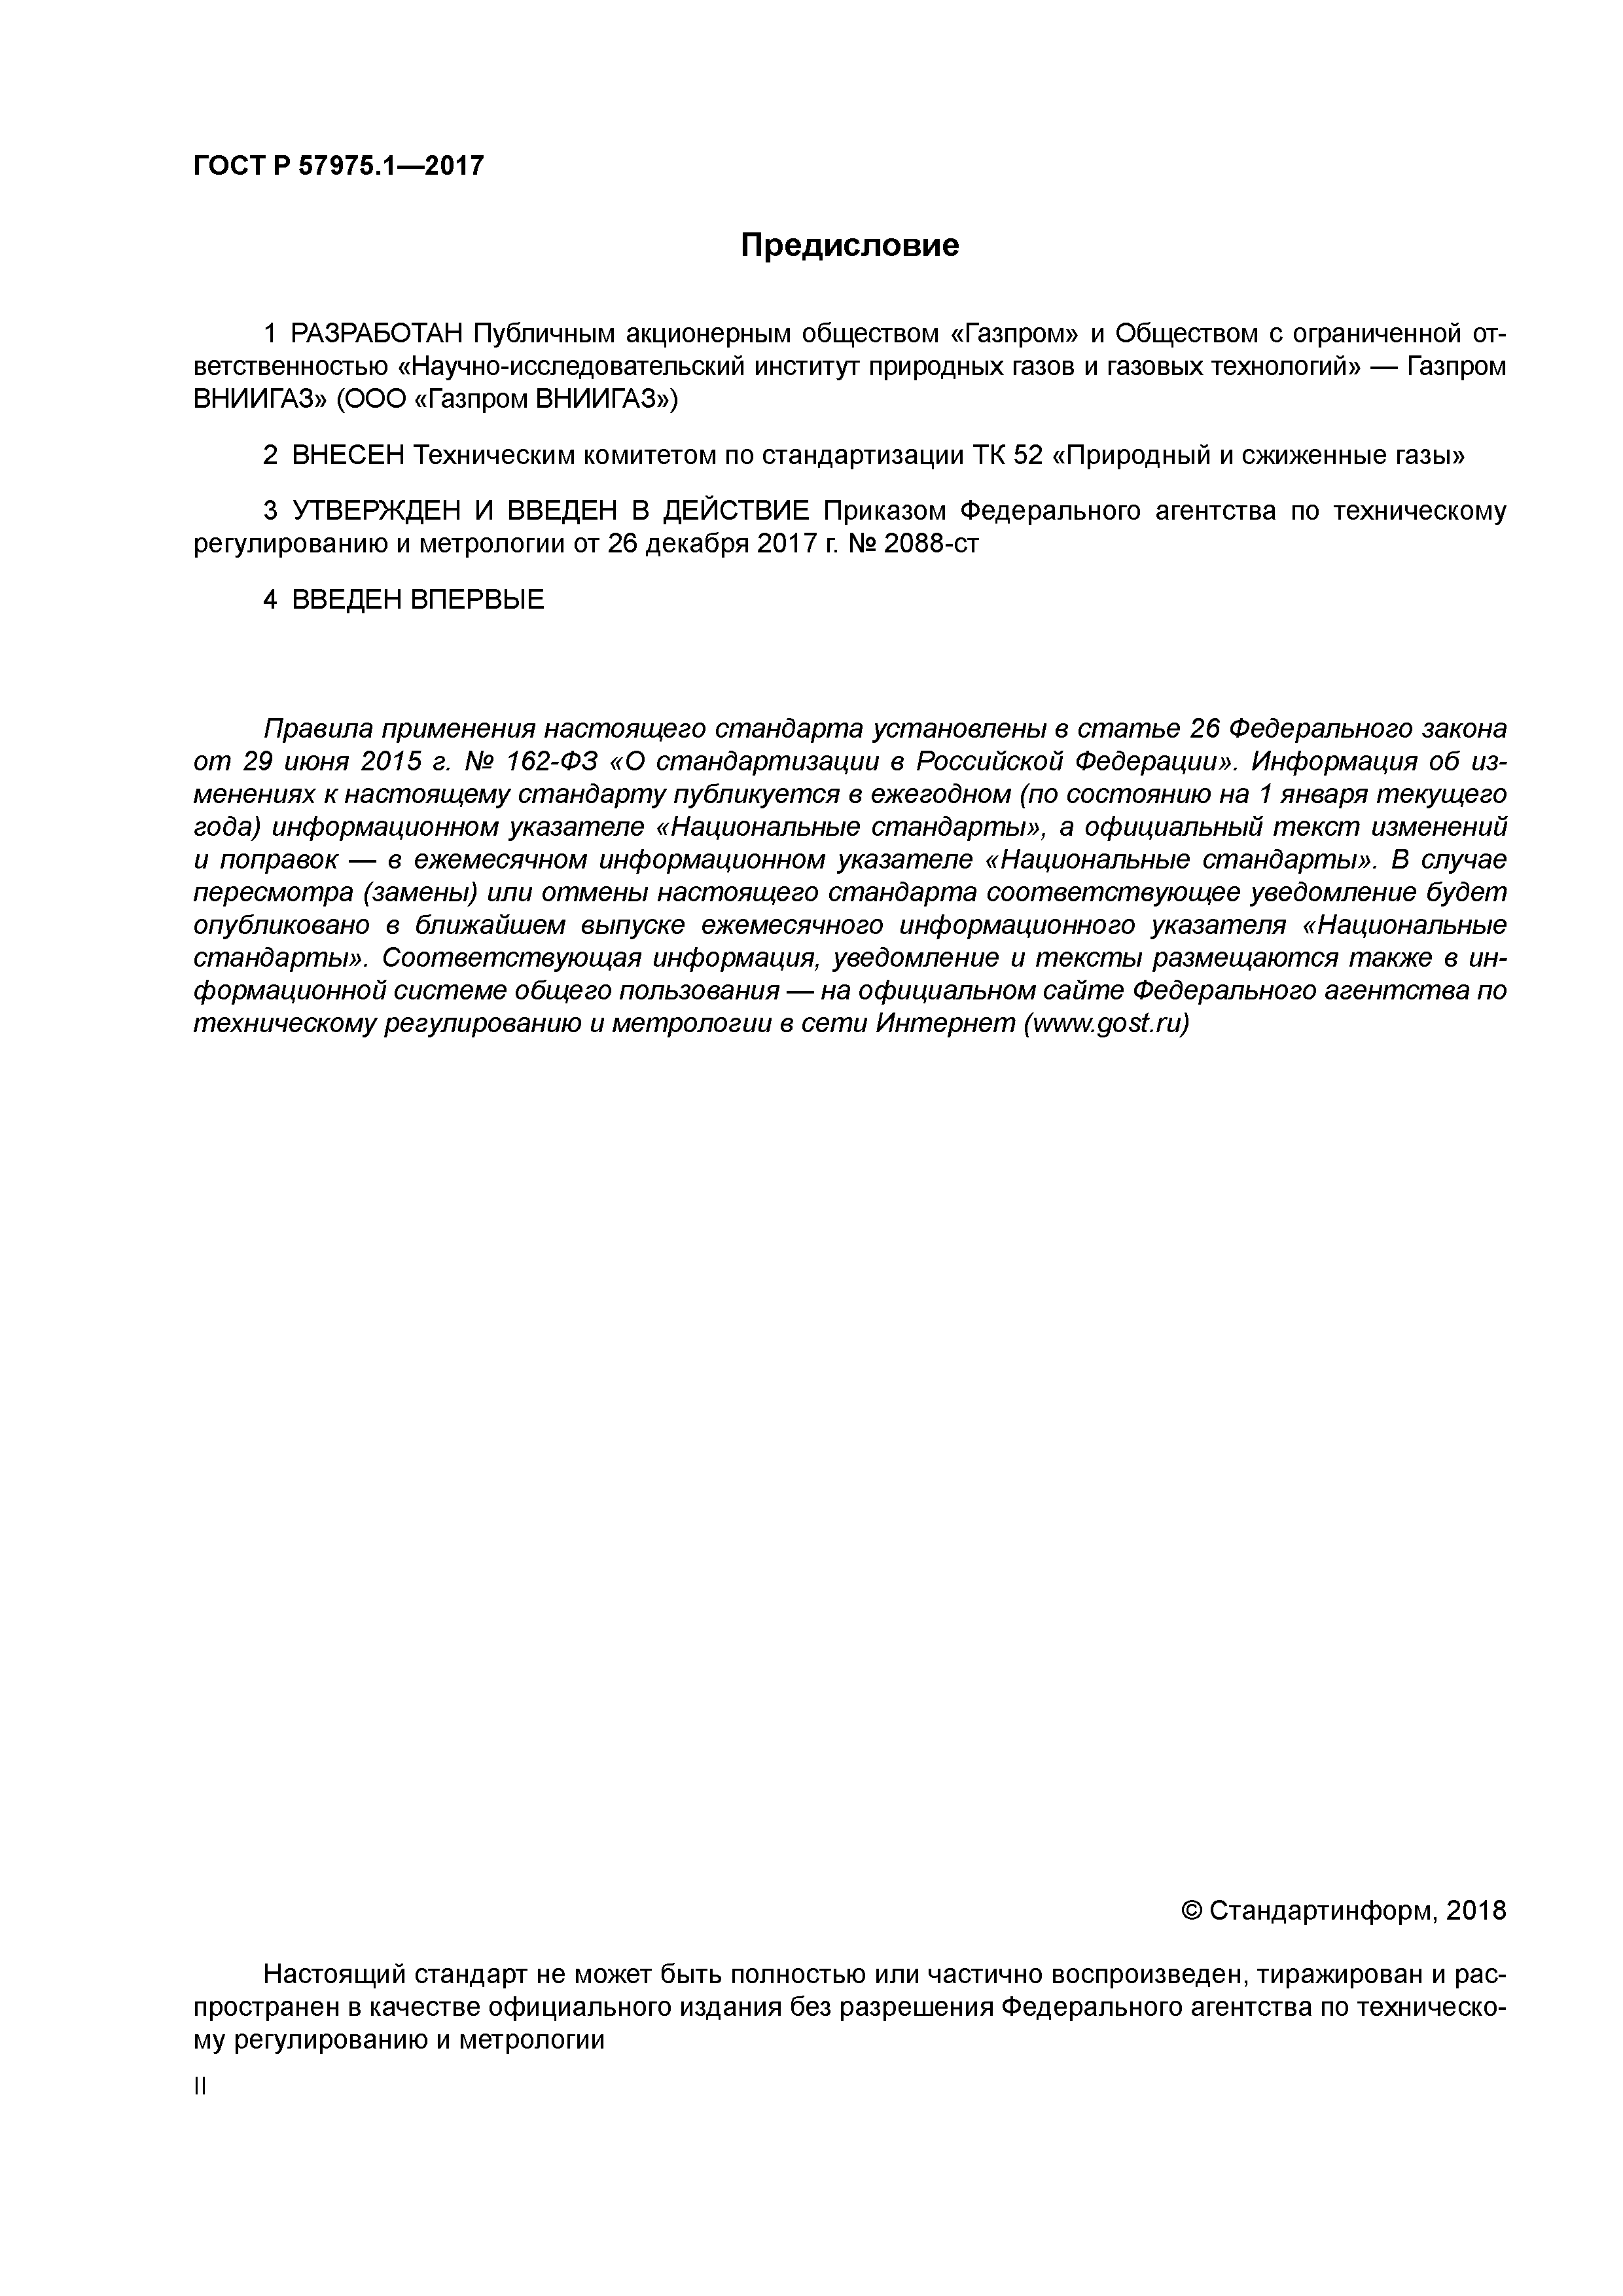 ГОСТ Р 57975.1-2017